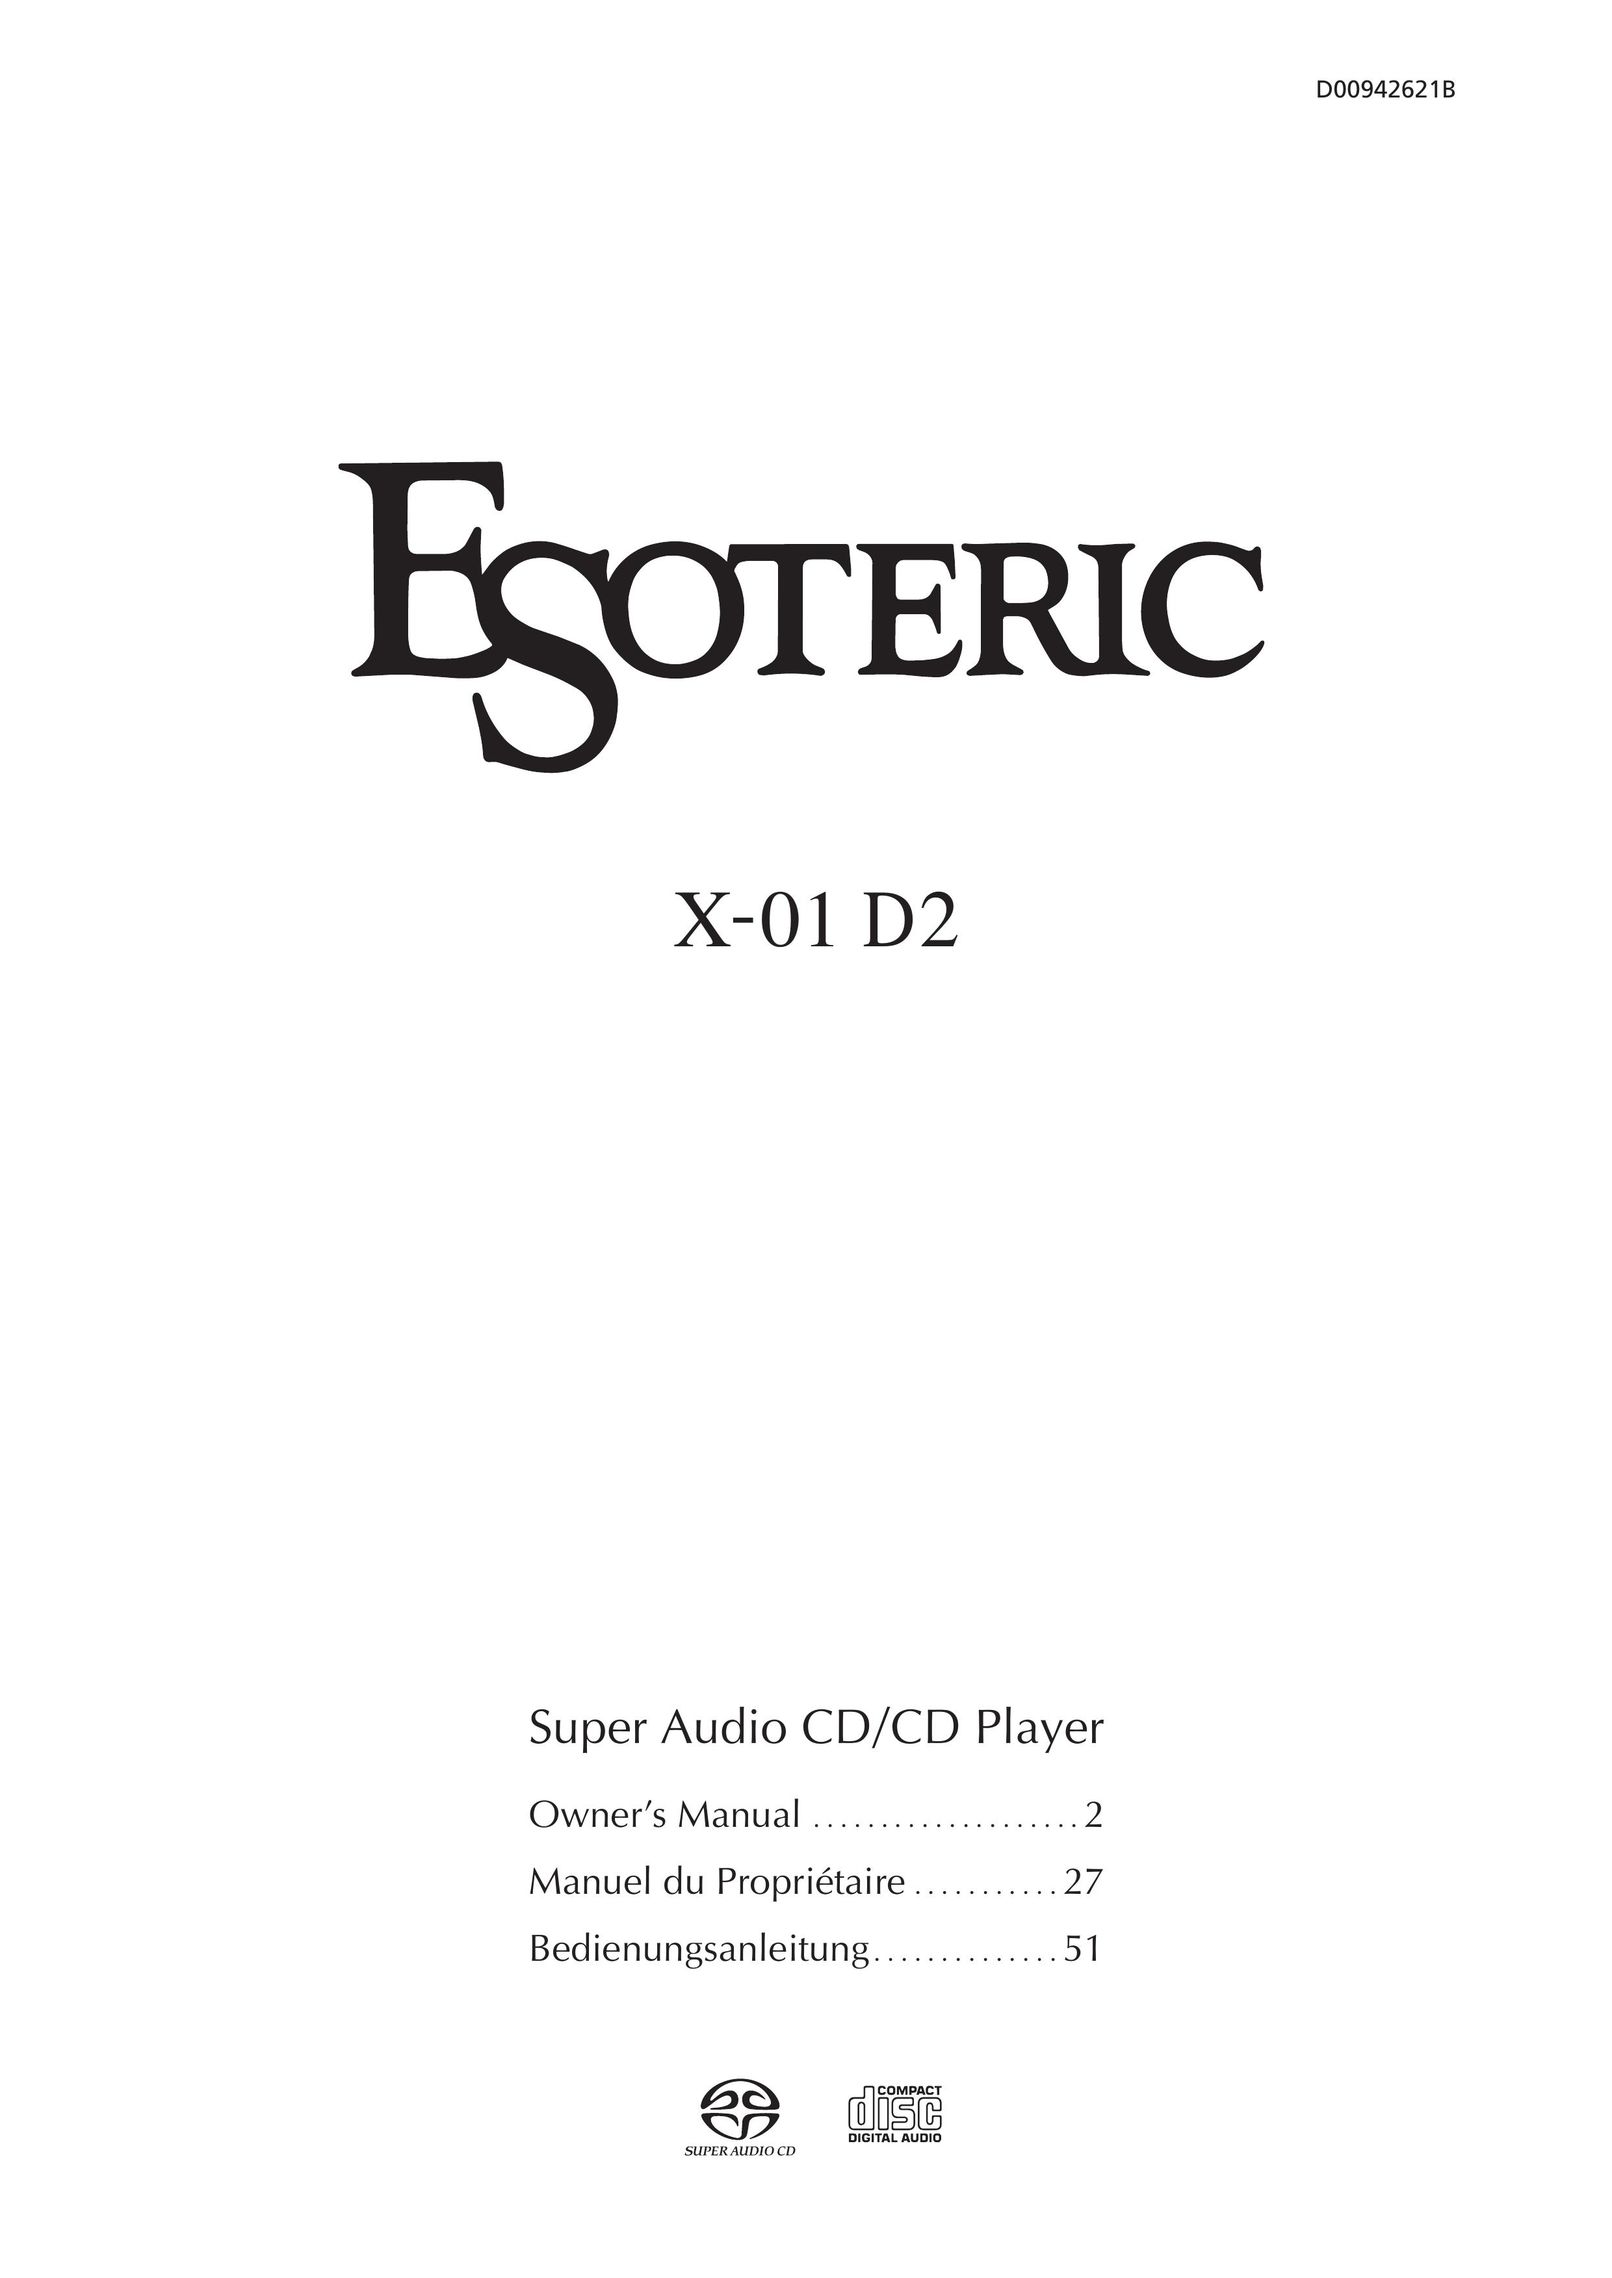 Esoteric X-01 D2 CD Player User Manual